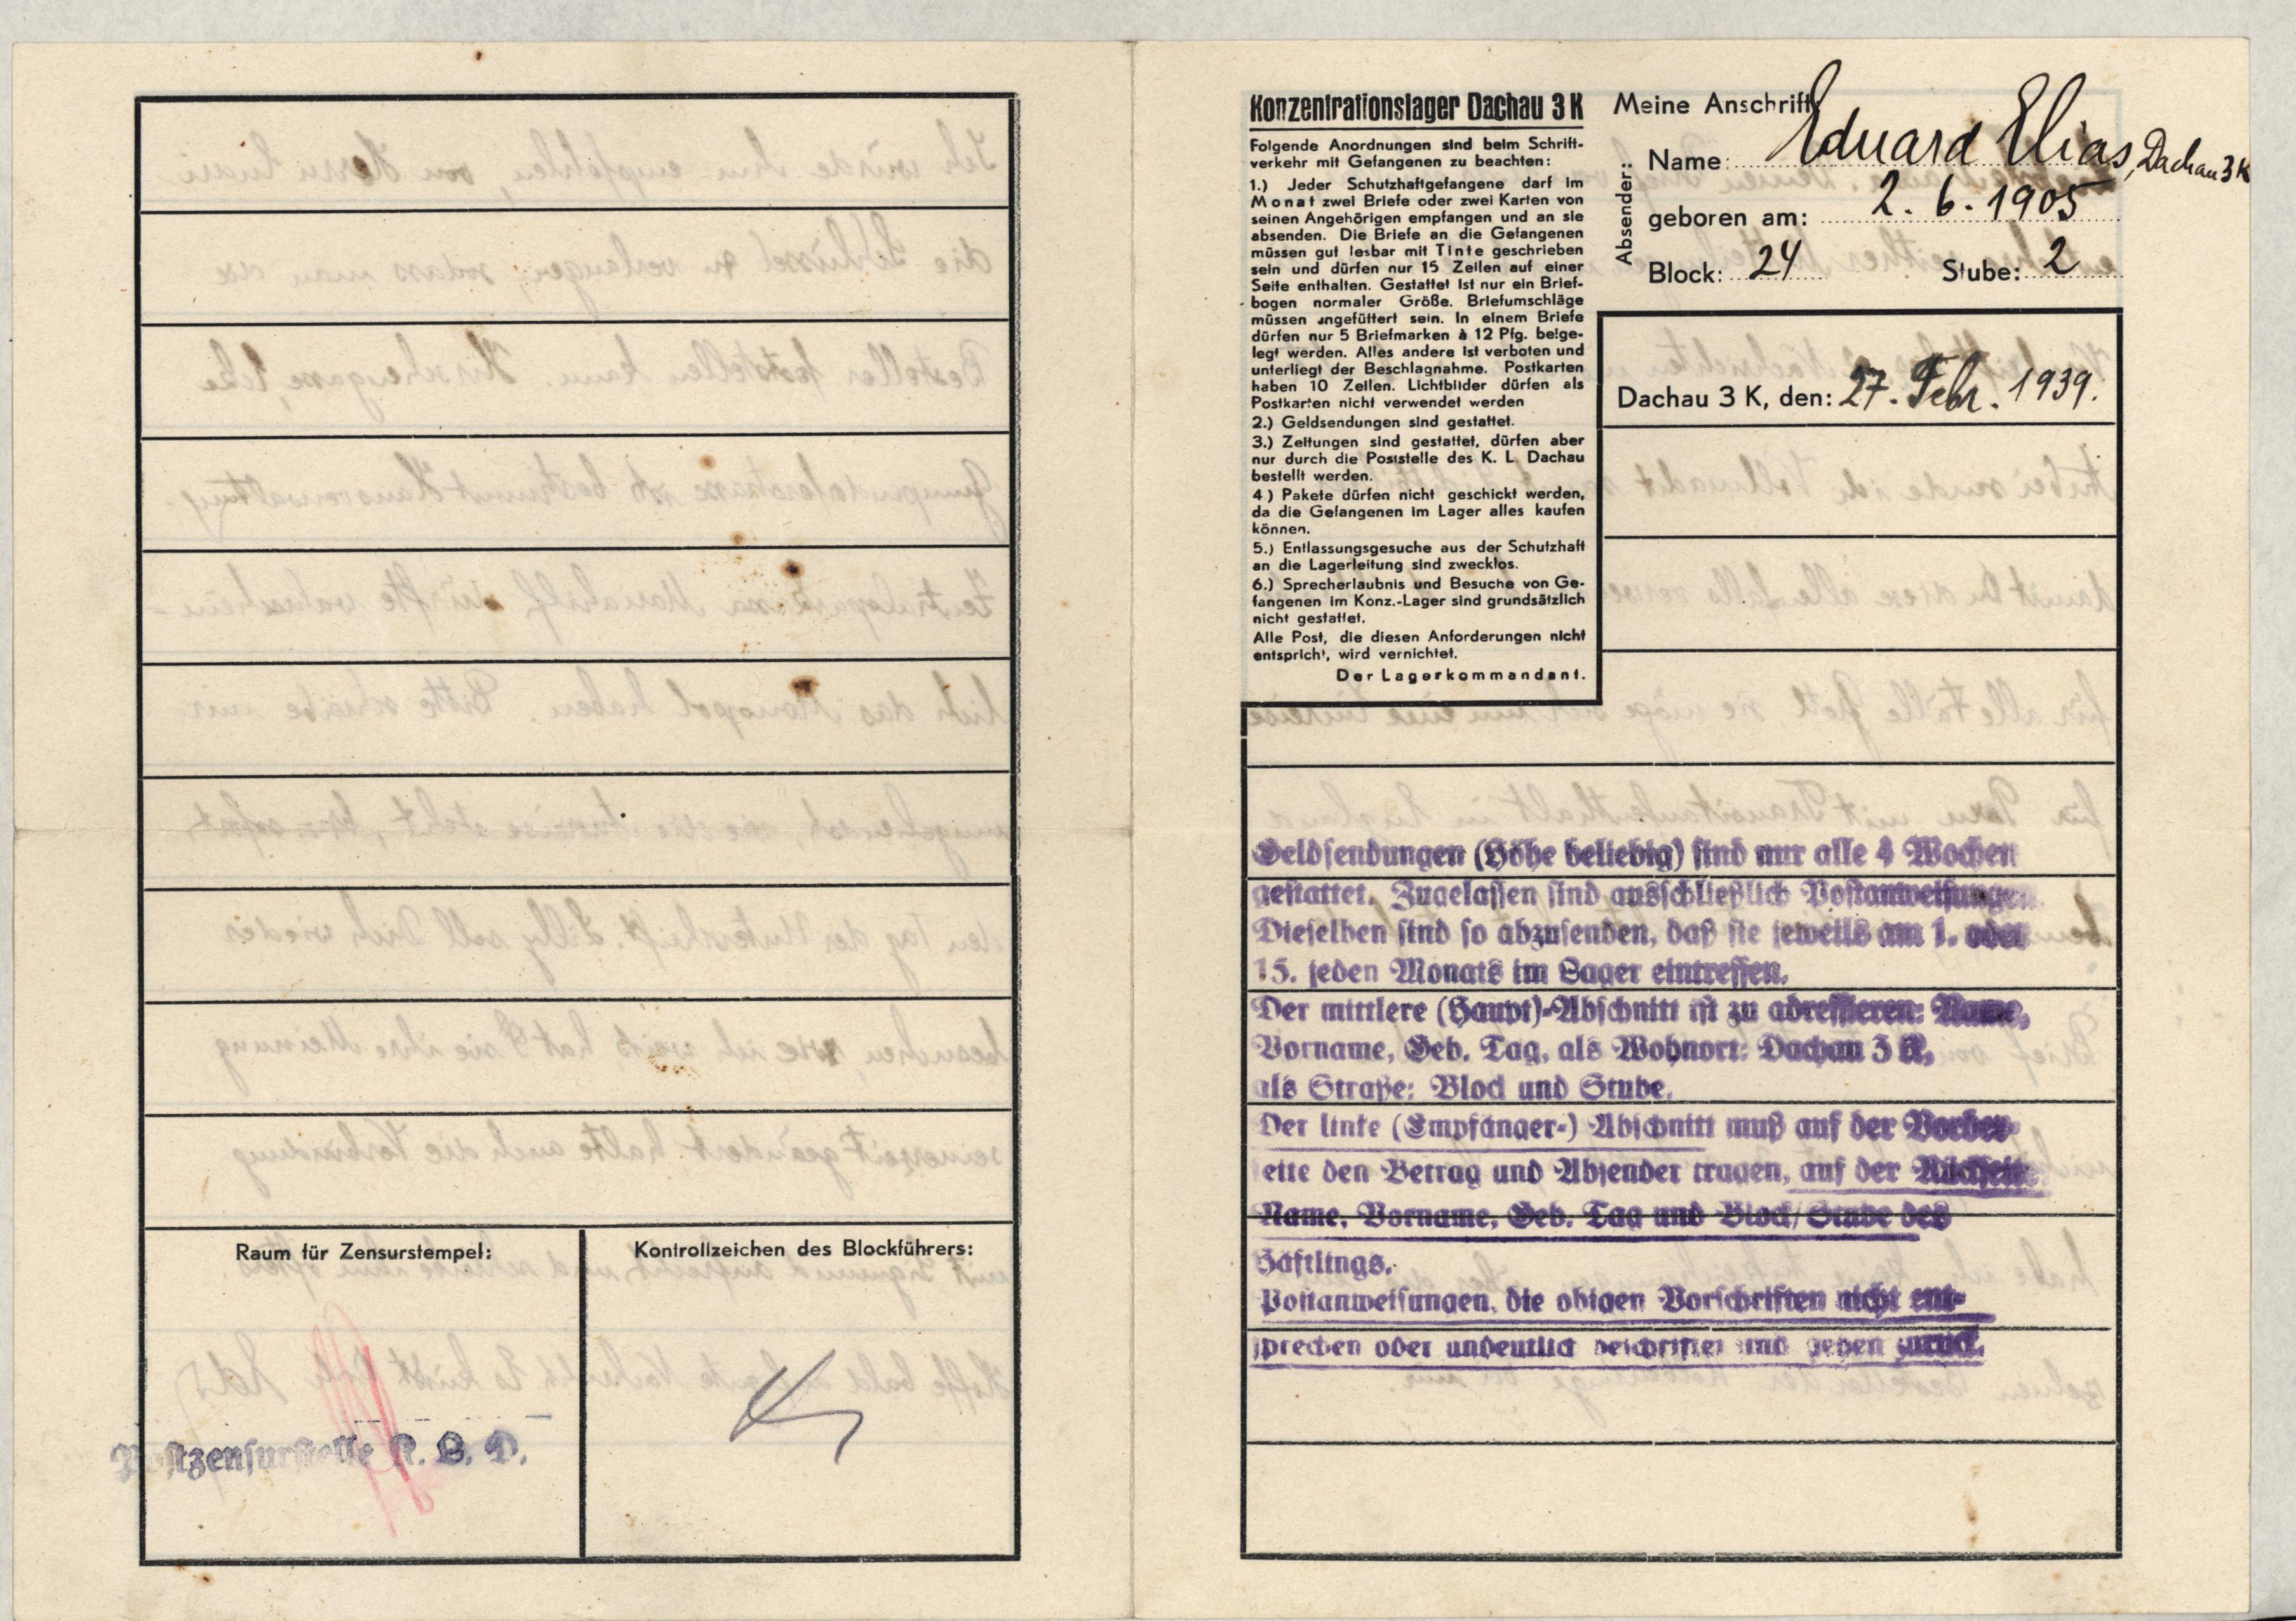 Eduard Elias, Dachau letter, 27 February 1939_001